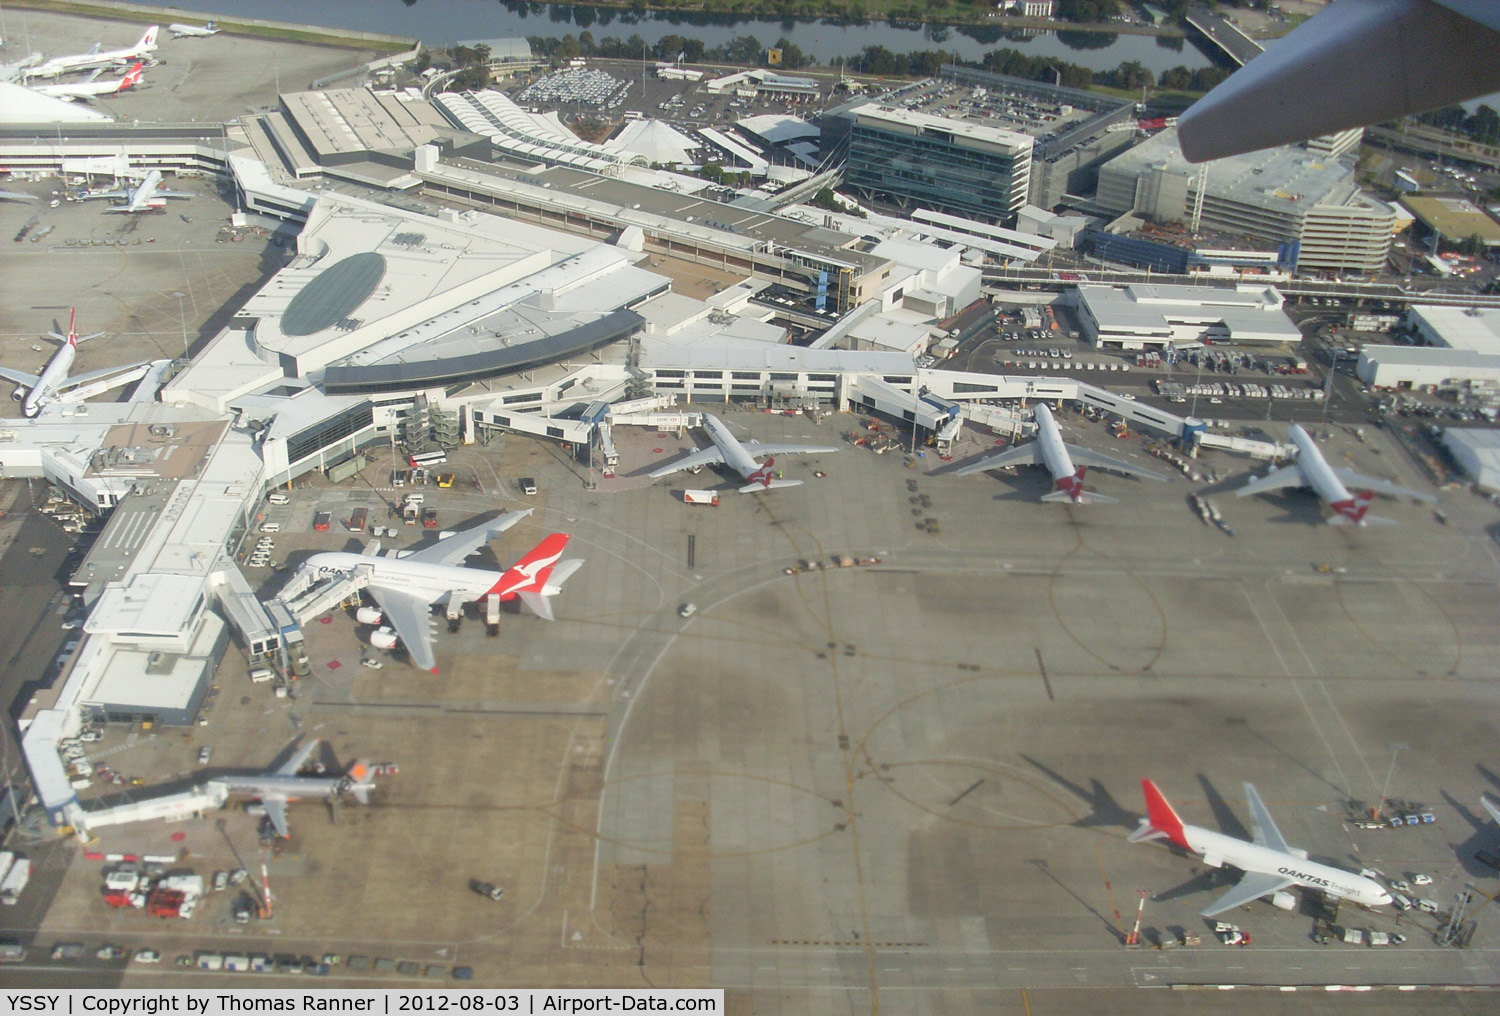 Sydney Airport, Mascot, New South Wales Australia (YSSY) - International Terminal